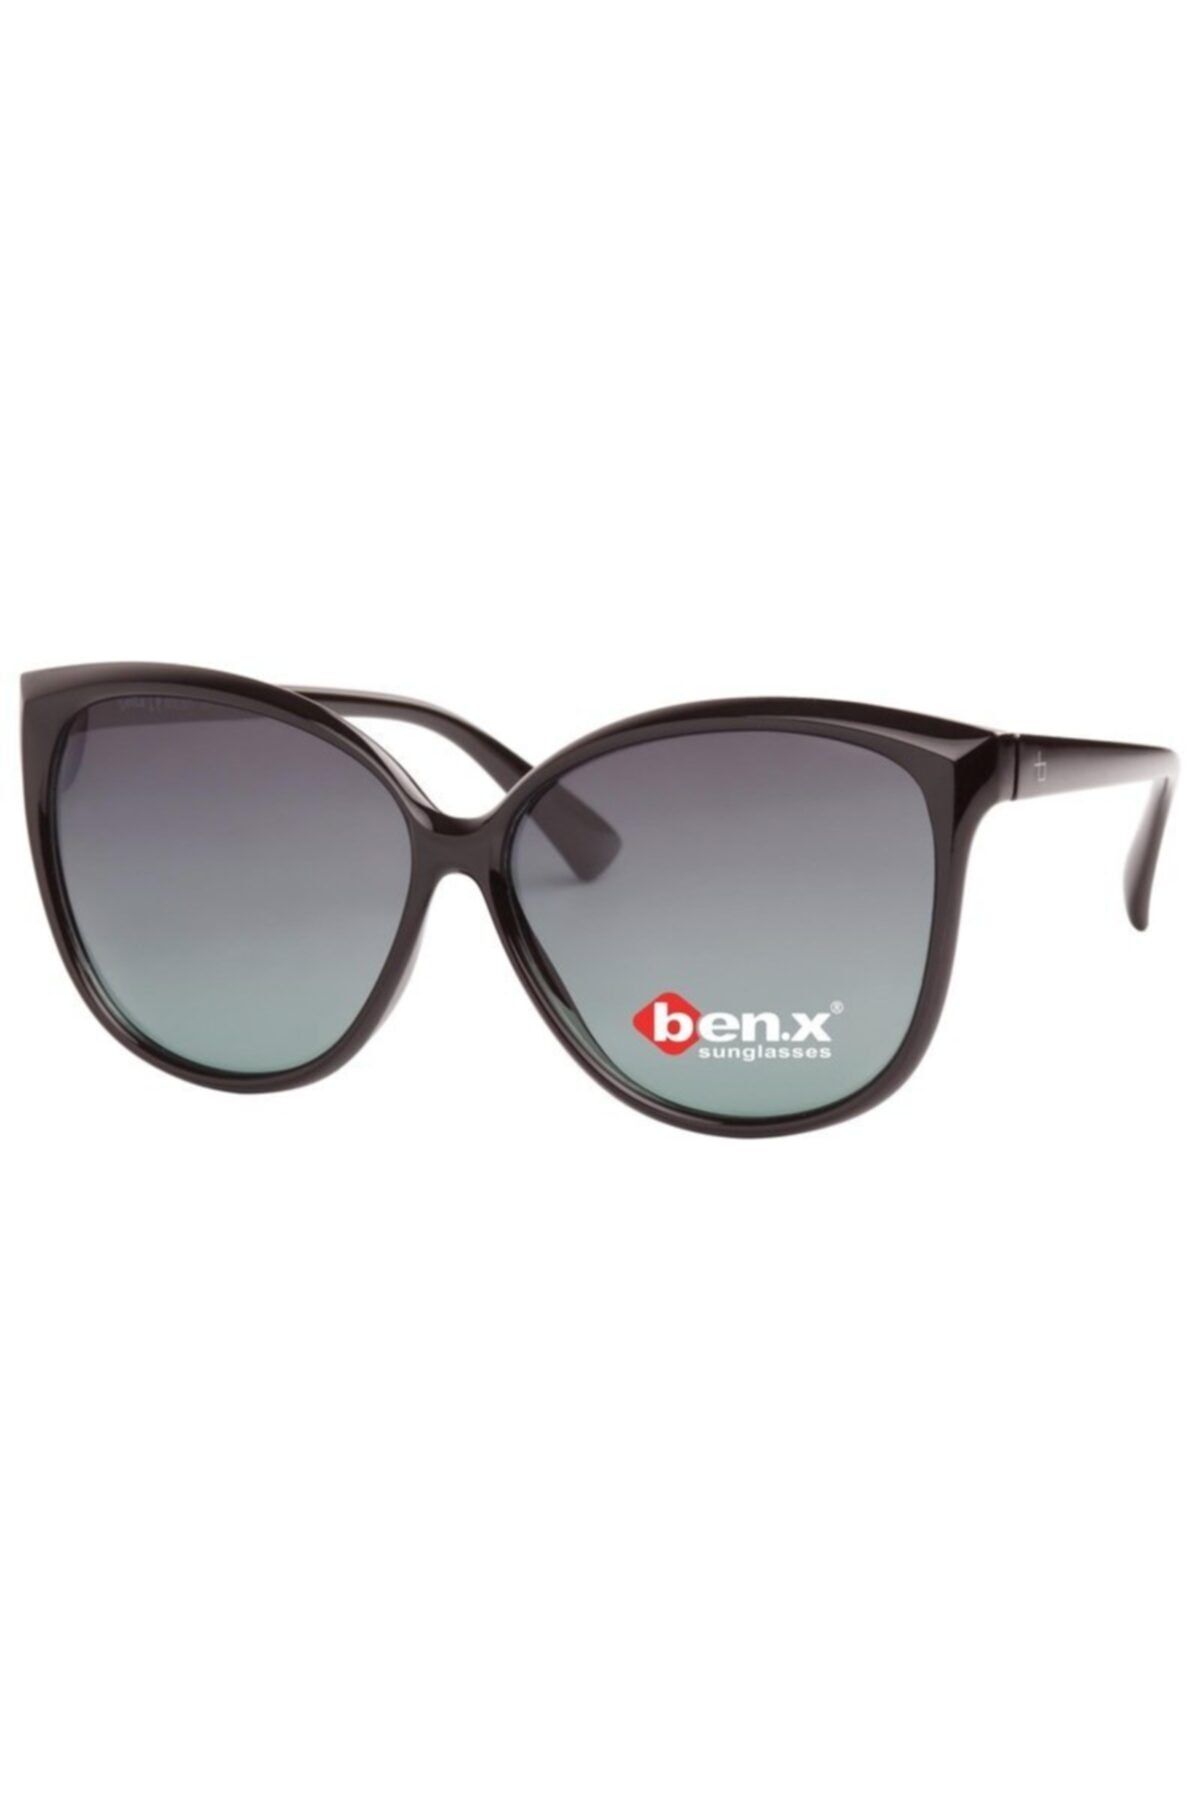 Benx Sunglasses Benx 9217-06-58